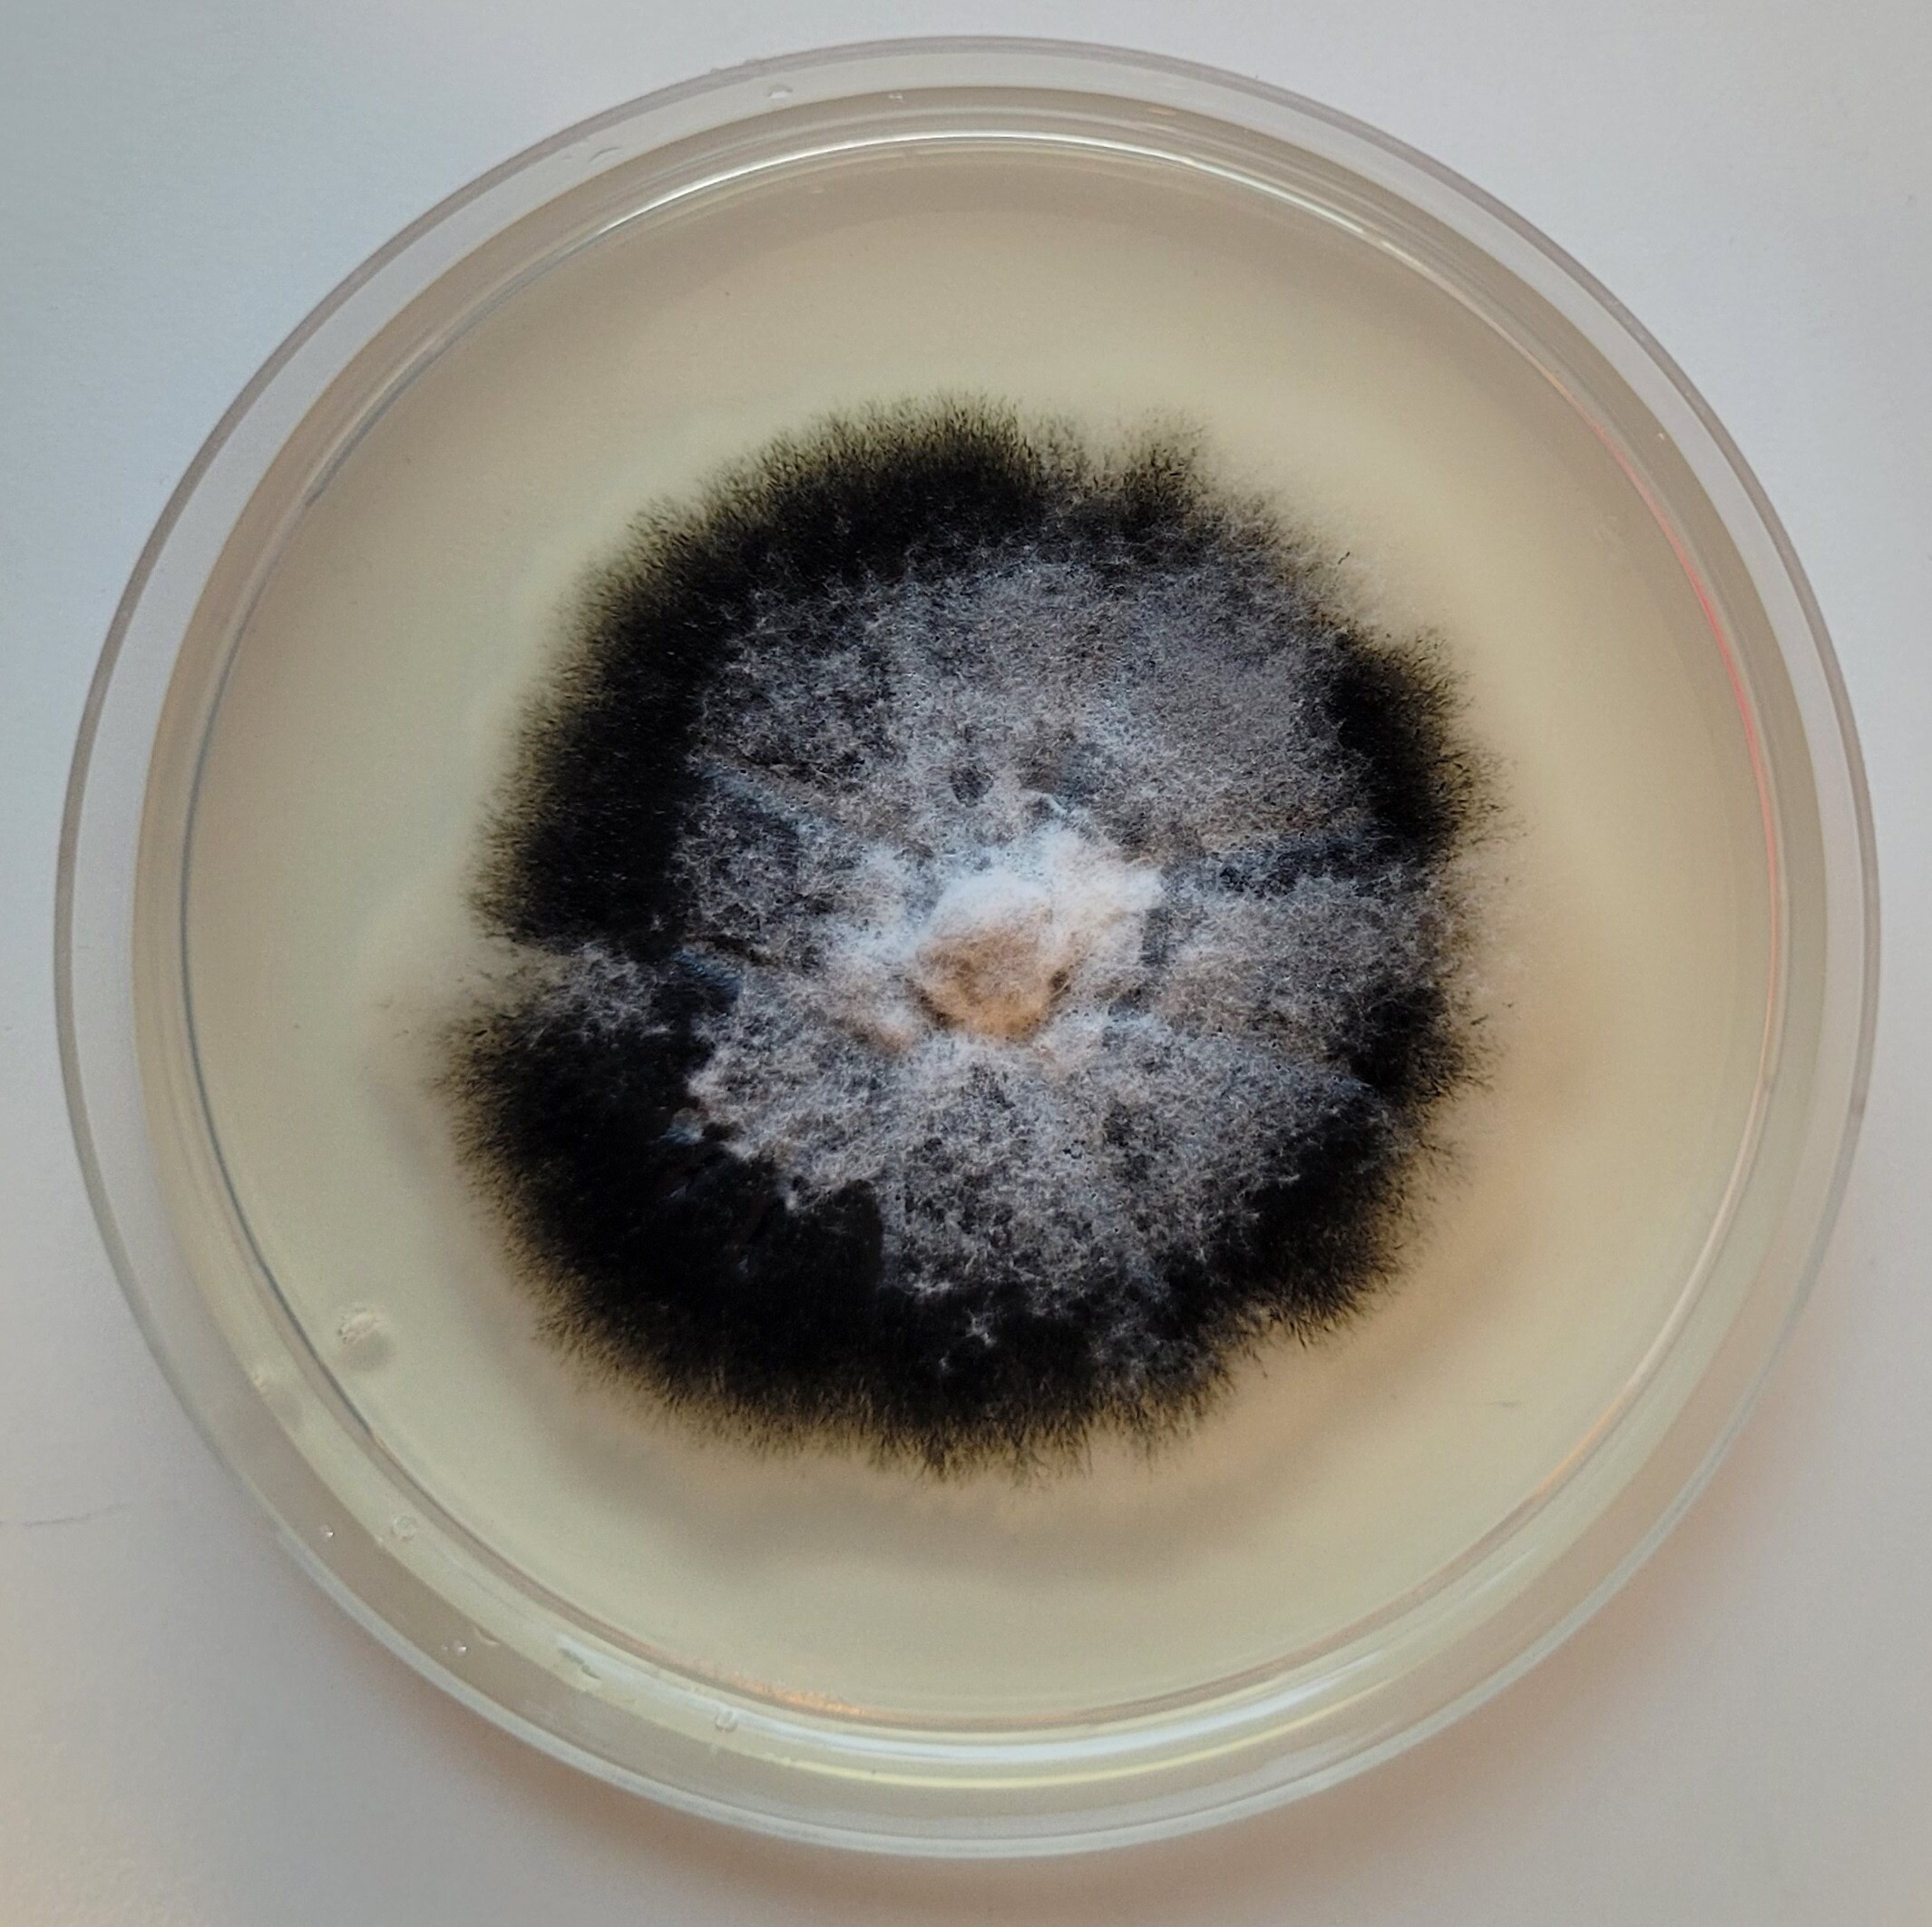 Verticillium longisporum growing on a petri dish